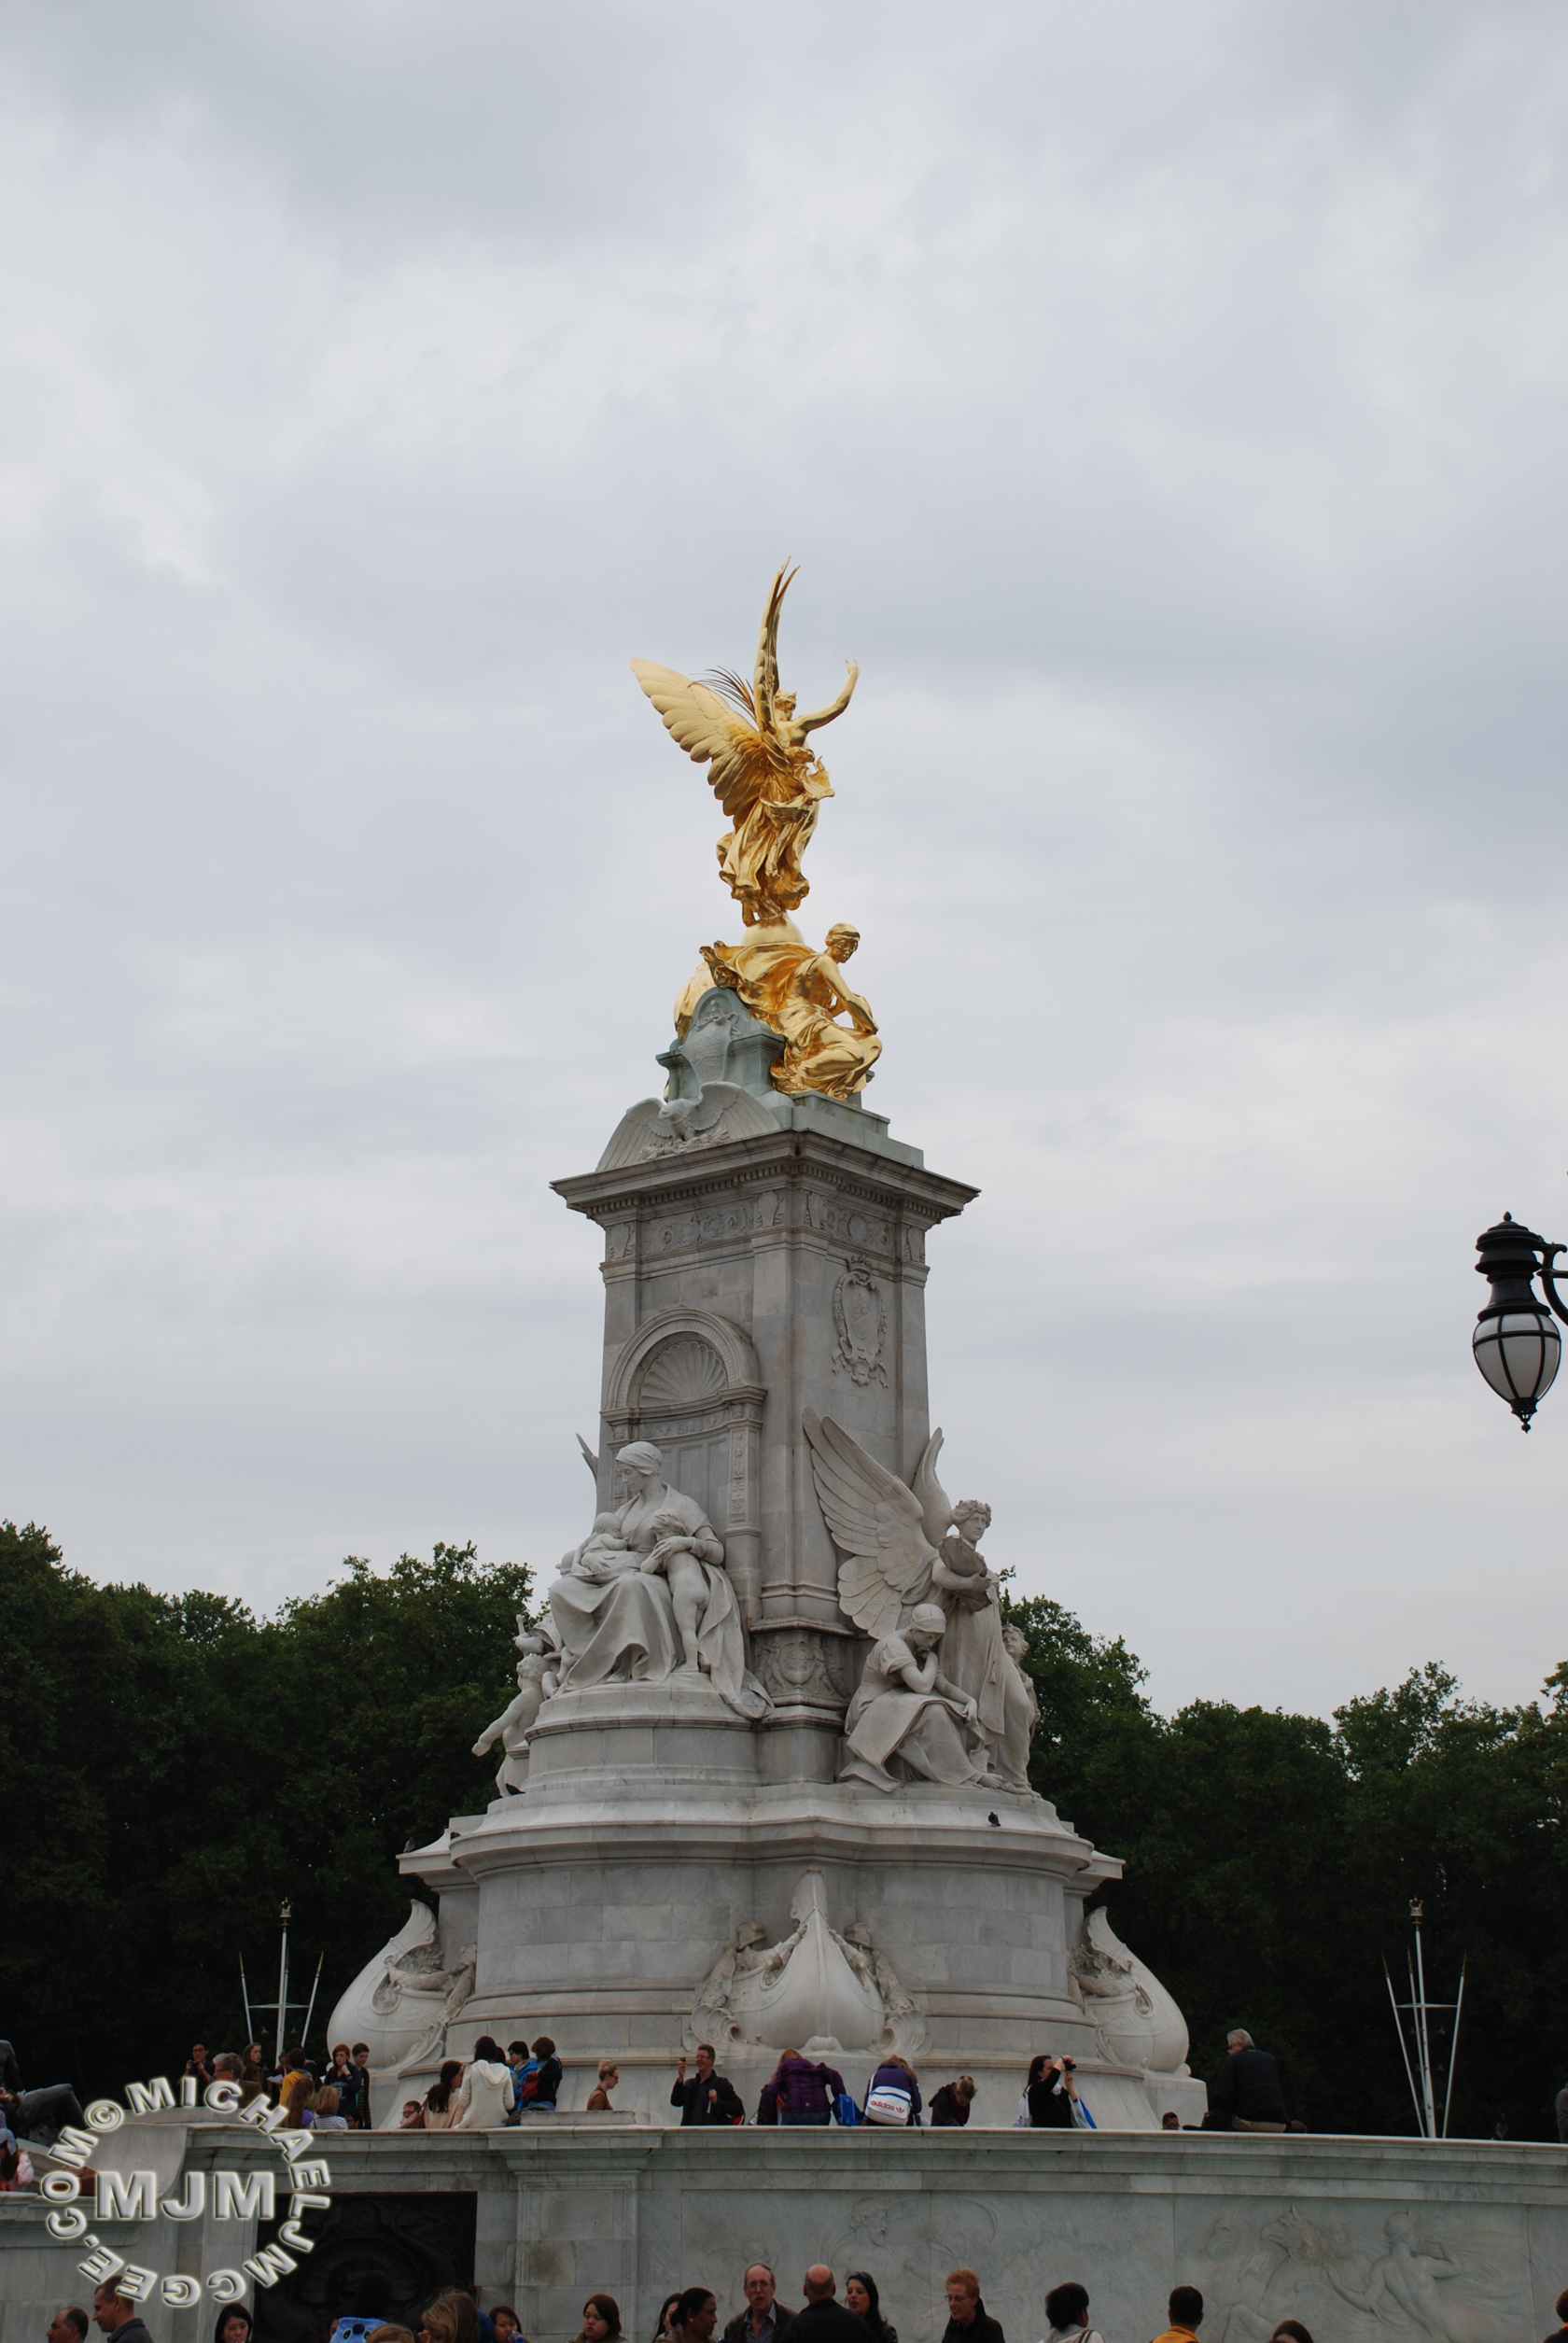 Buckingham Palace / michaeljmcgee.com